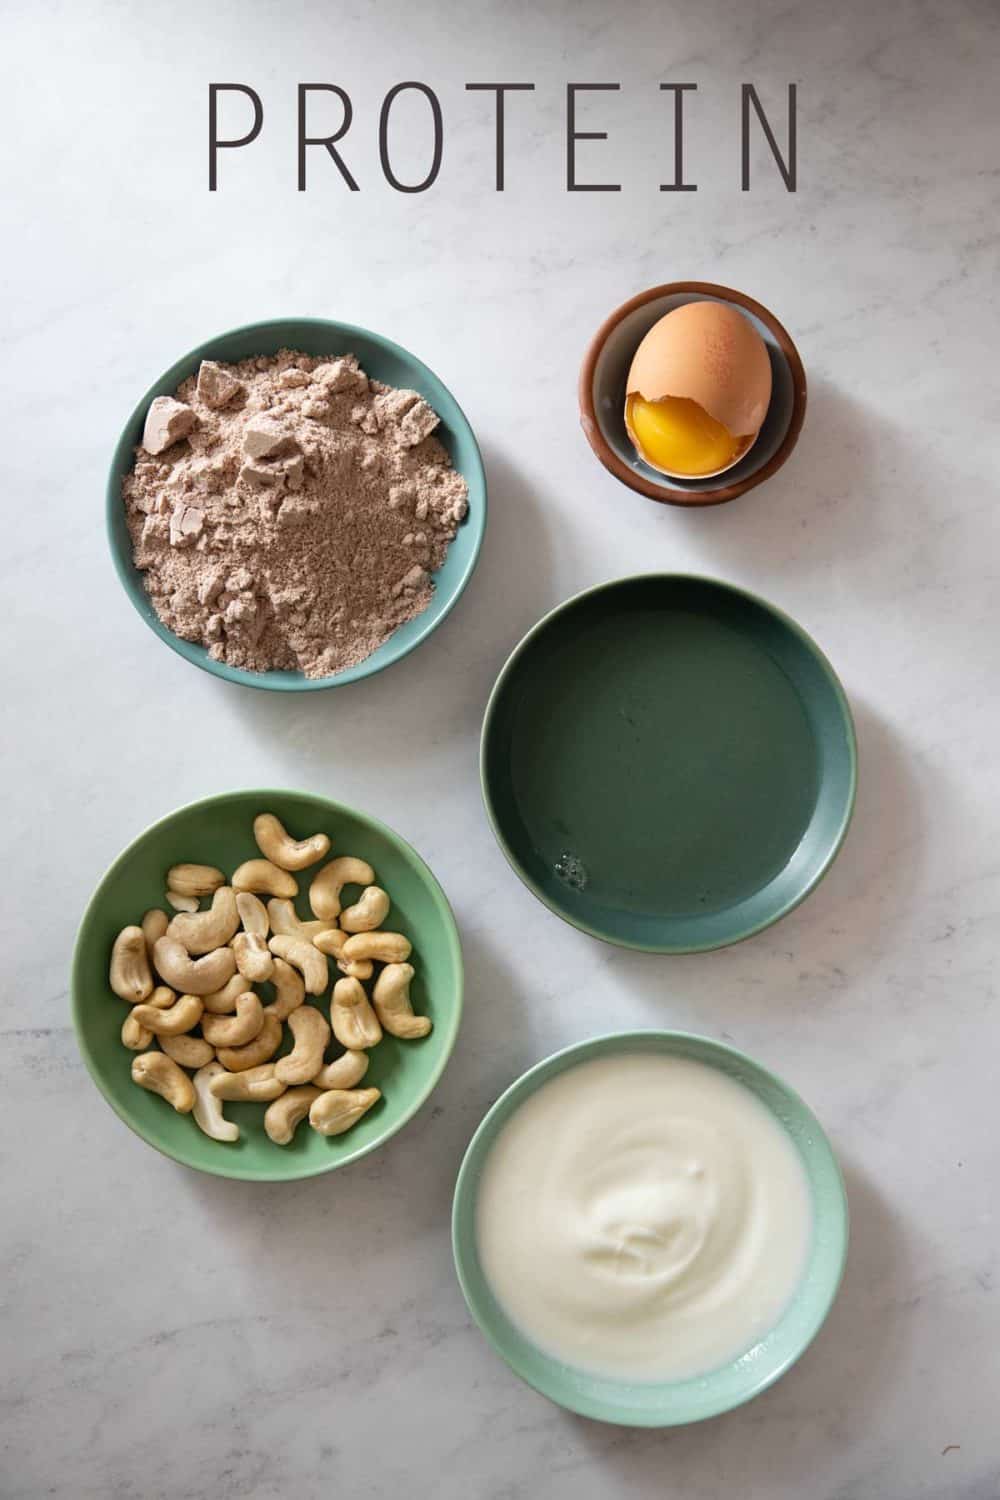 Yogurt, cashews, protein powder, egg white, egg shell with egg yolk in 5 little bowls.